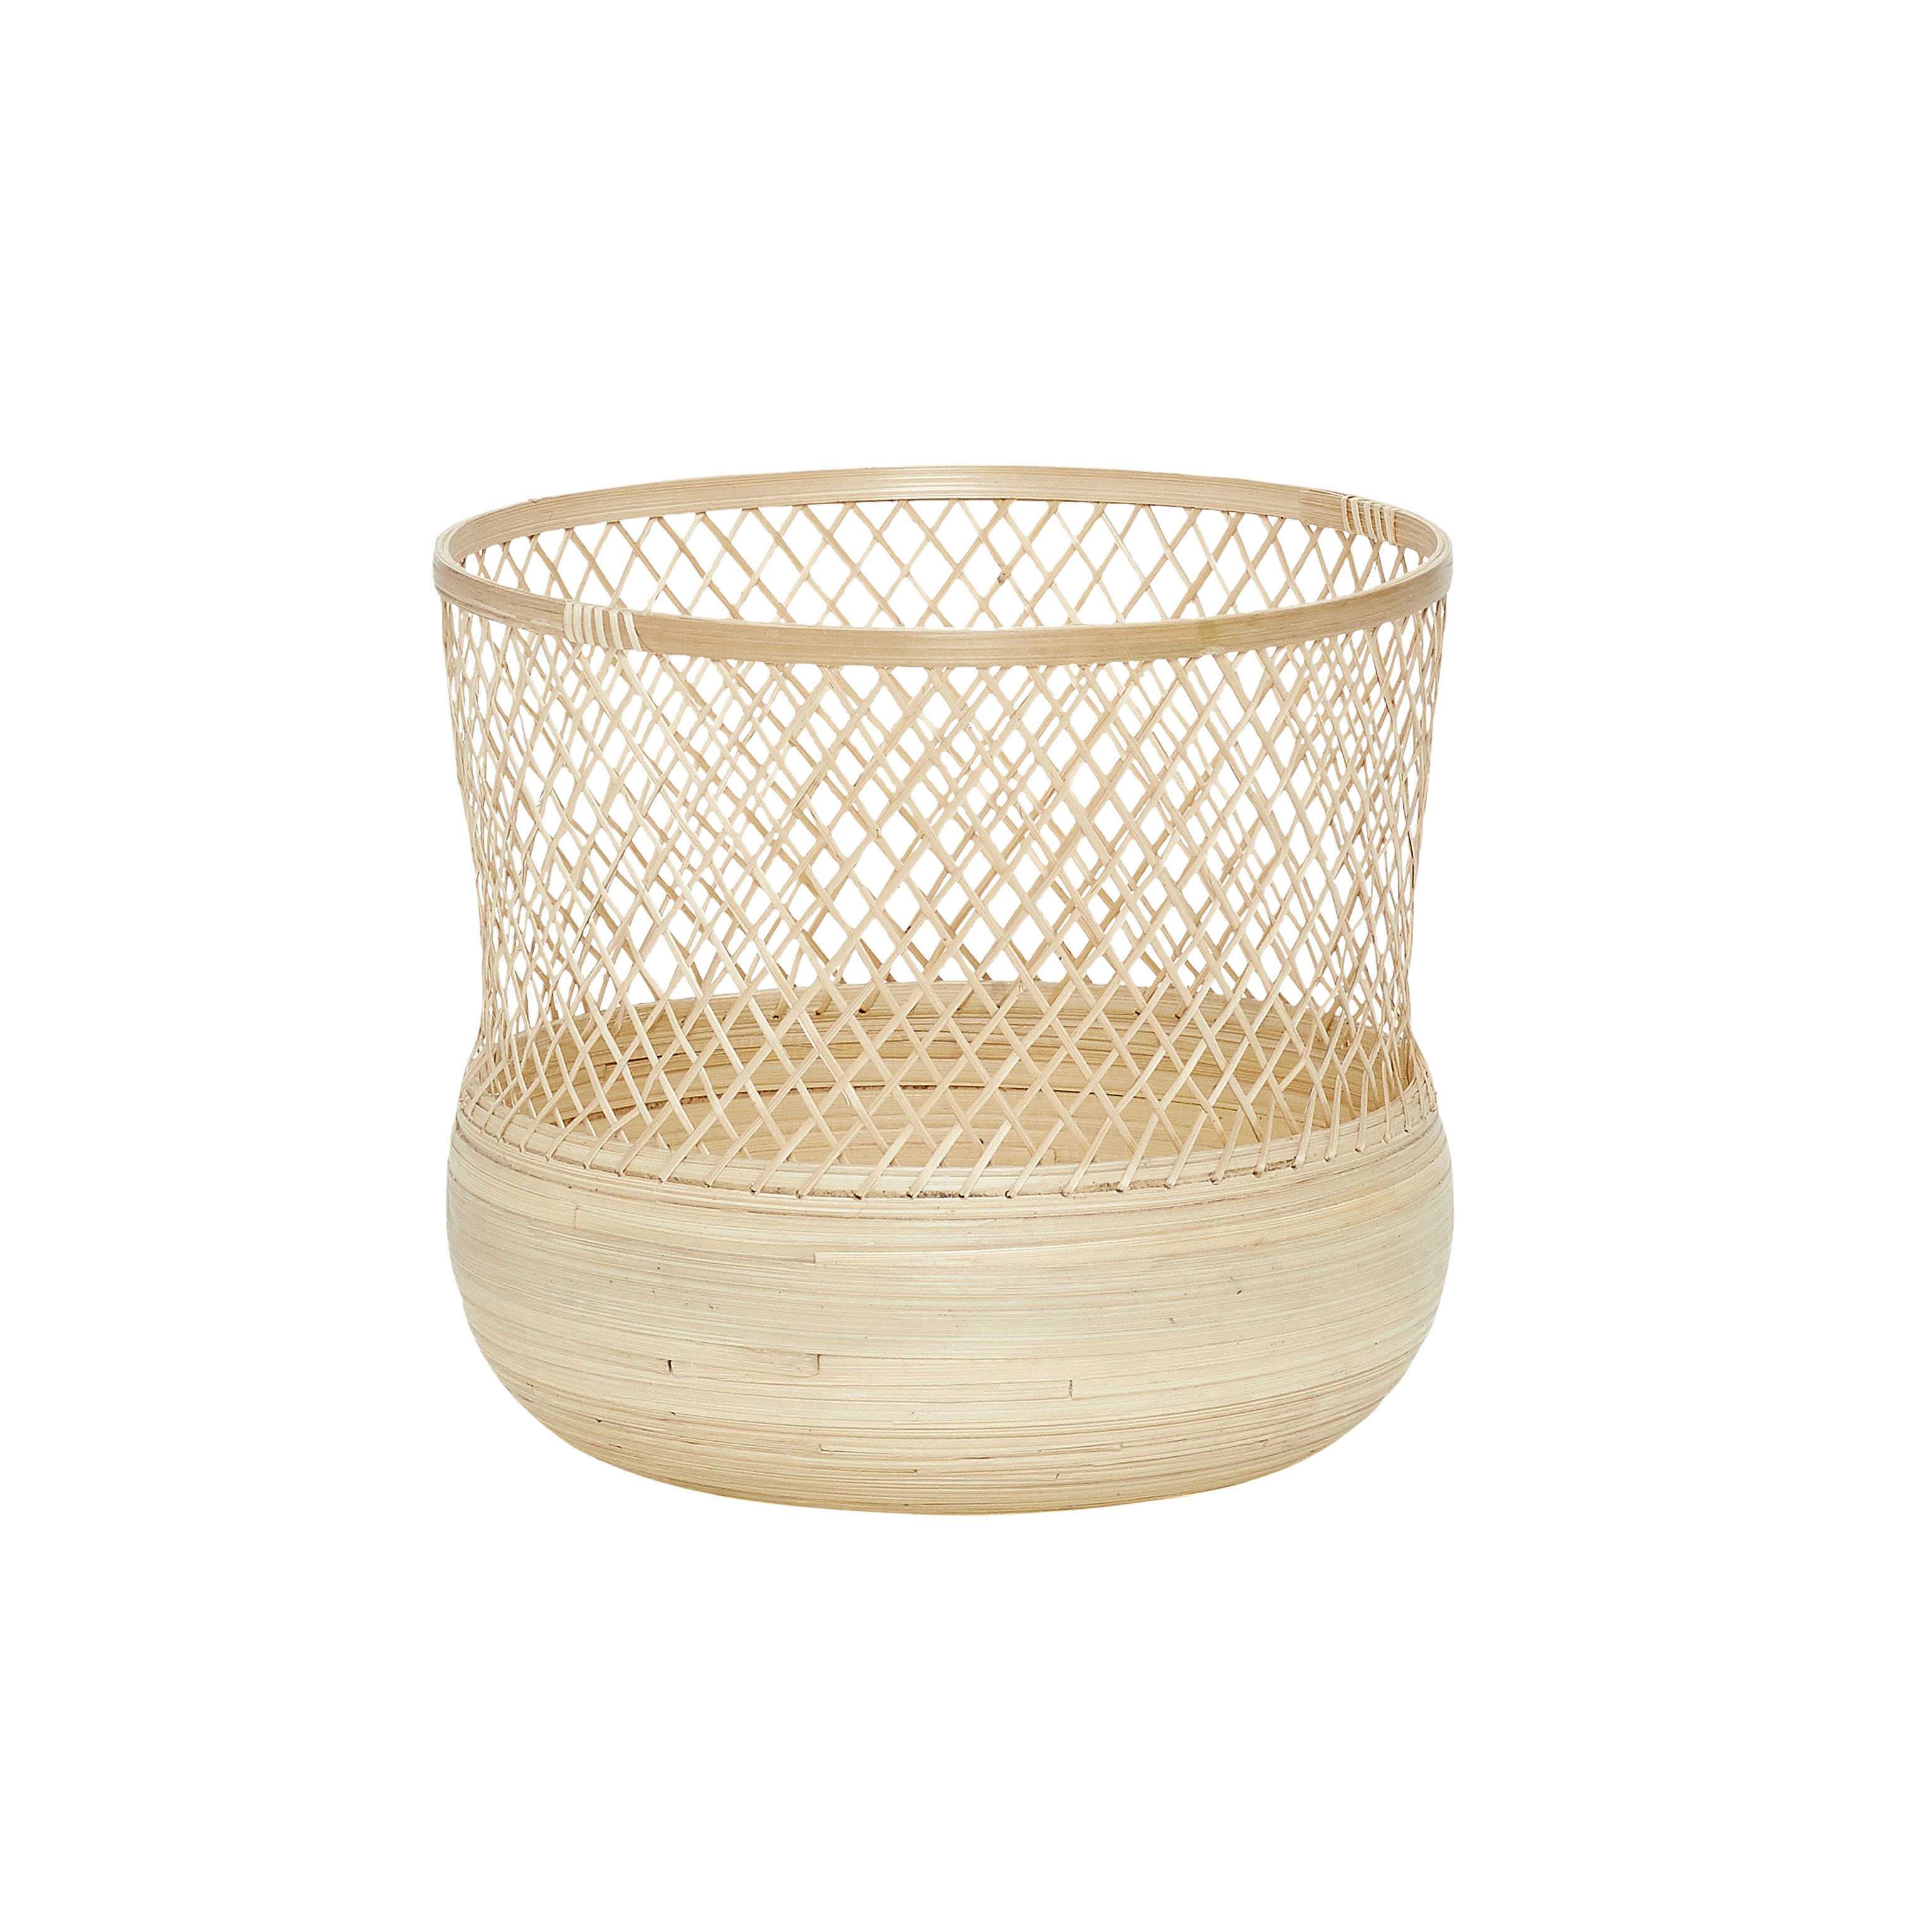 Hubsch Round Bamboo Baskets in Large